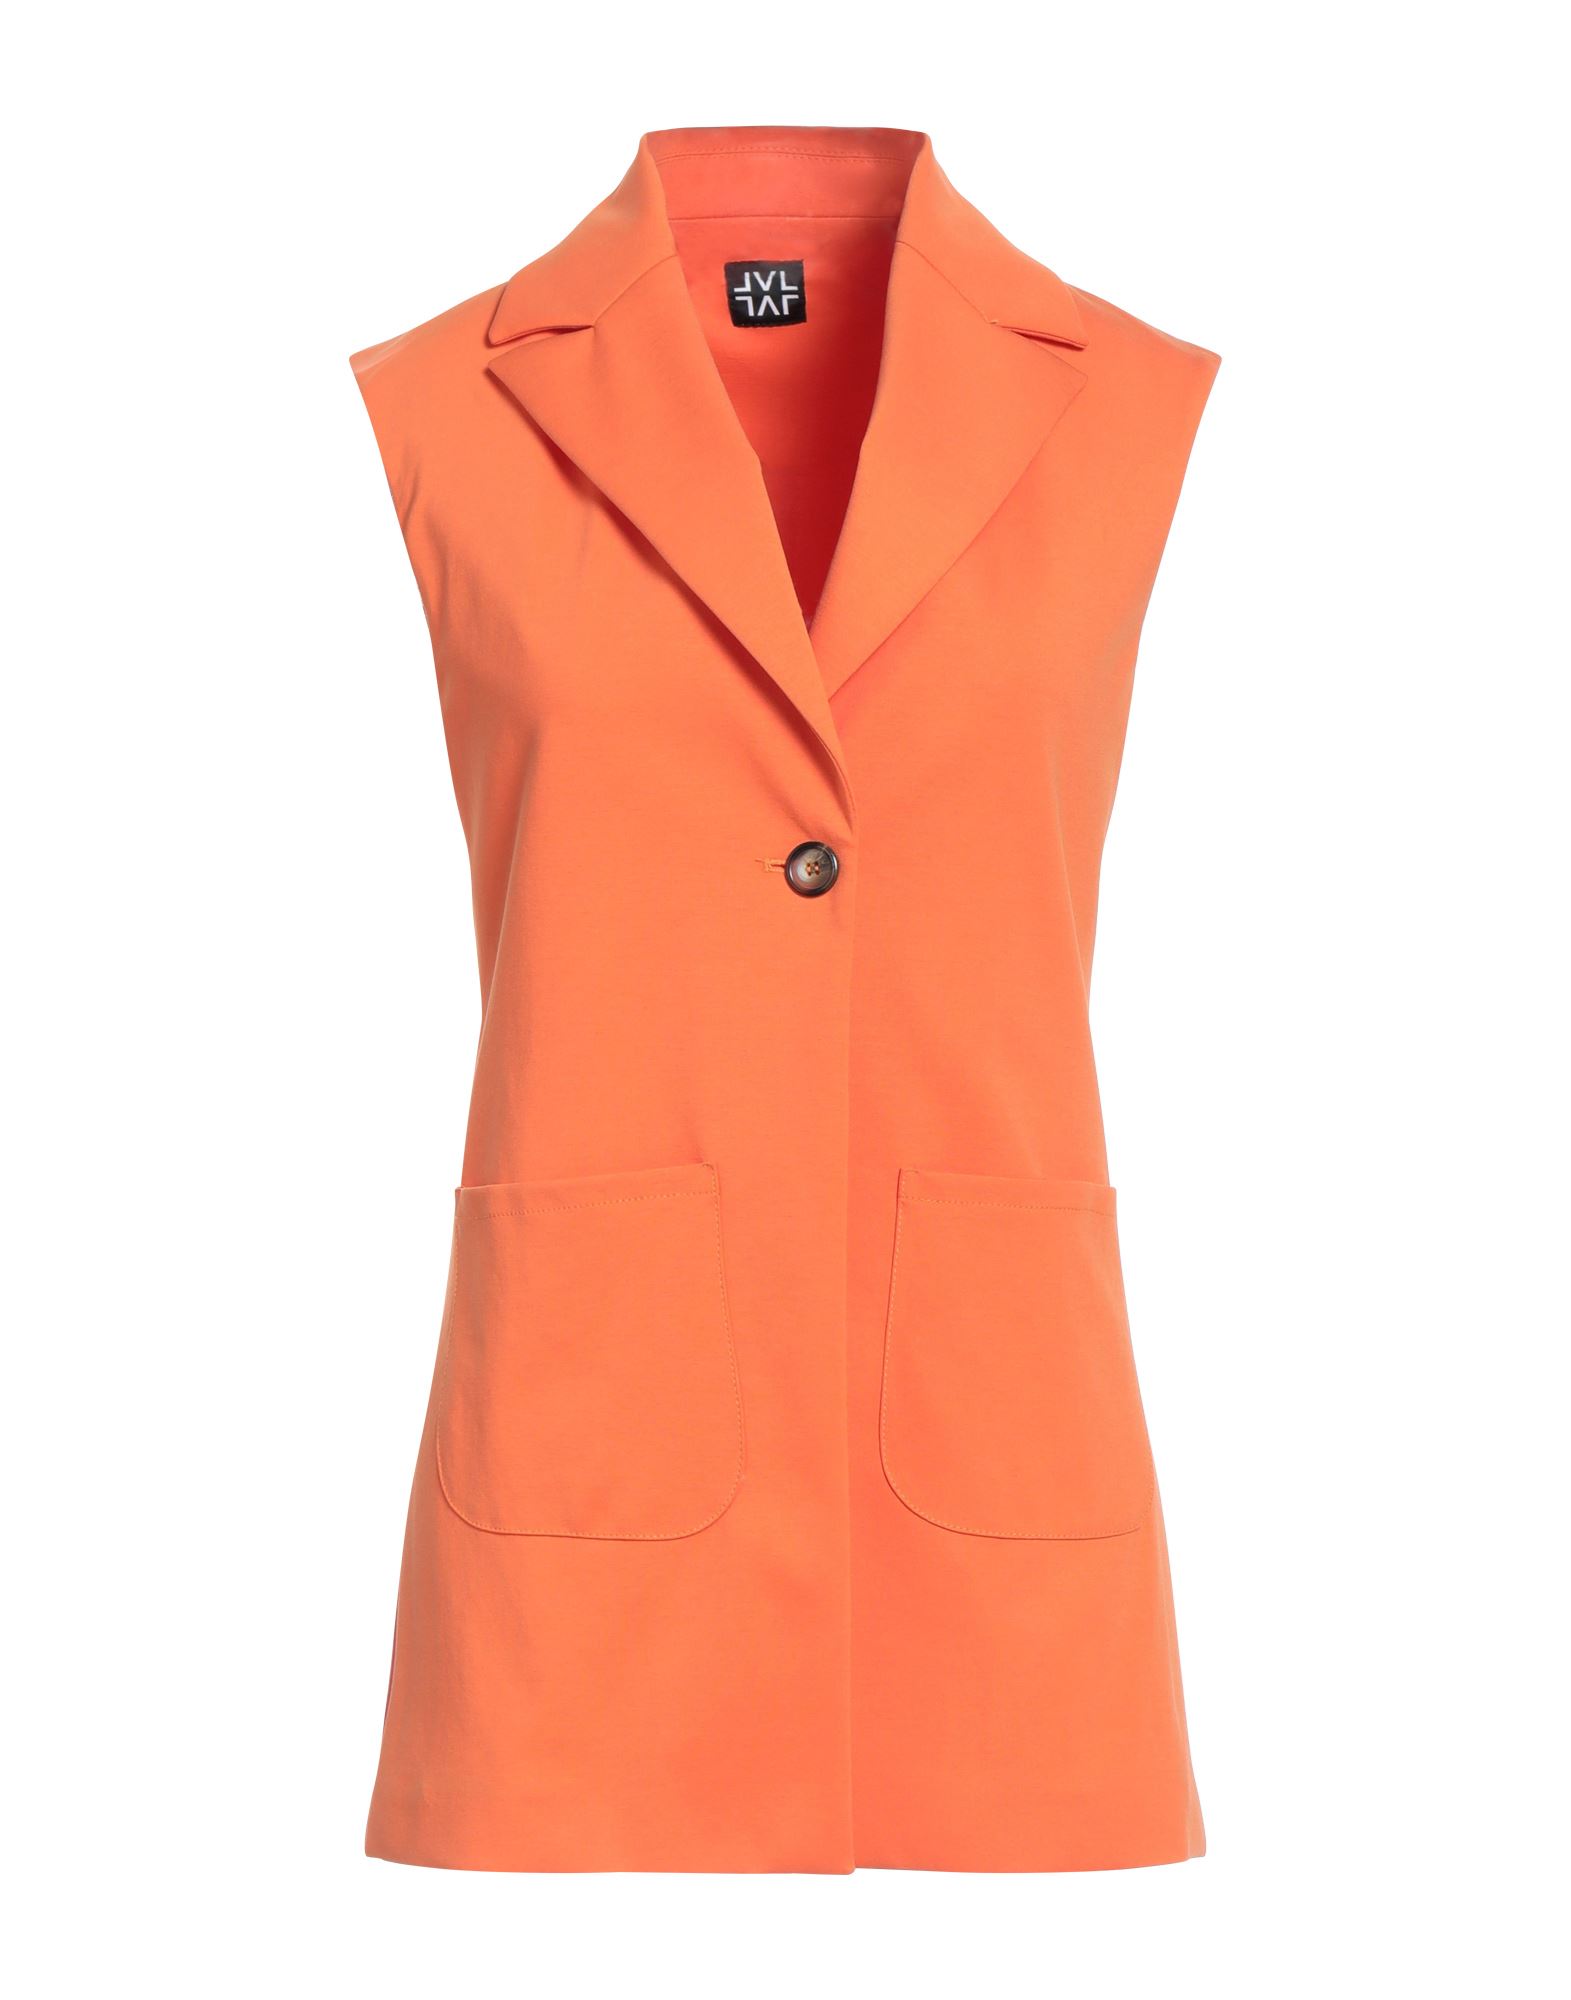 Lvl Level Vibes Level Suit Jackets In Orange